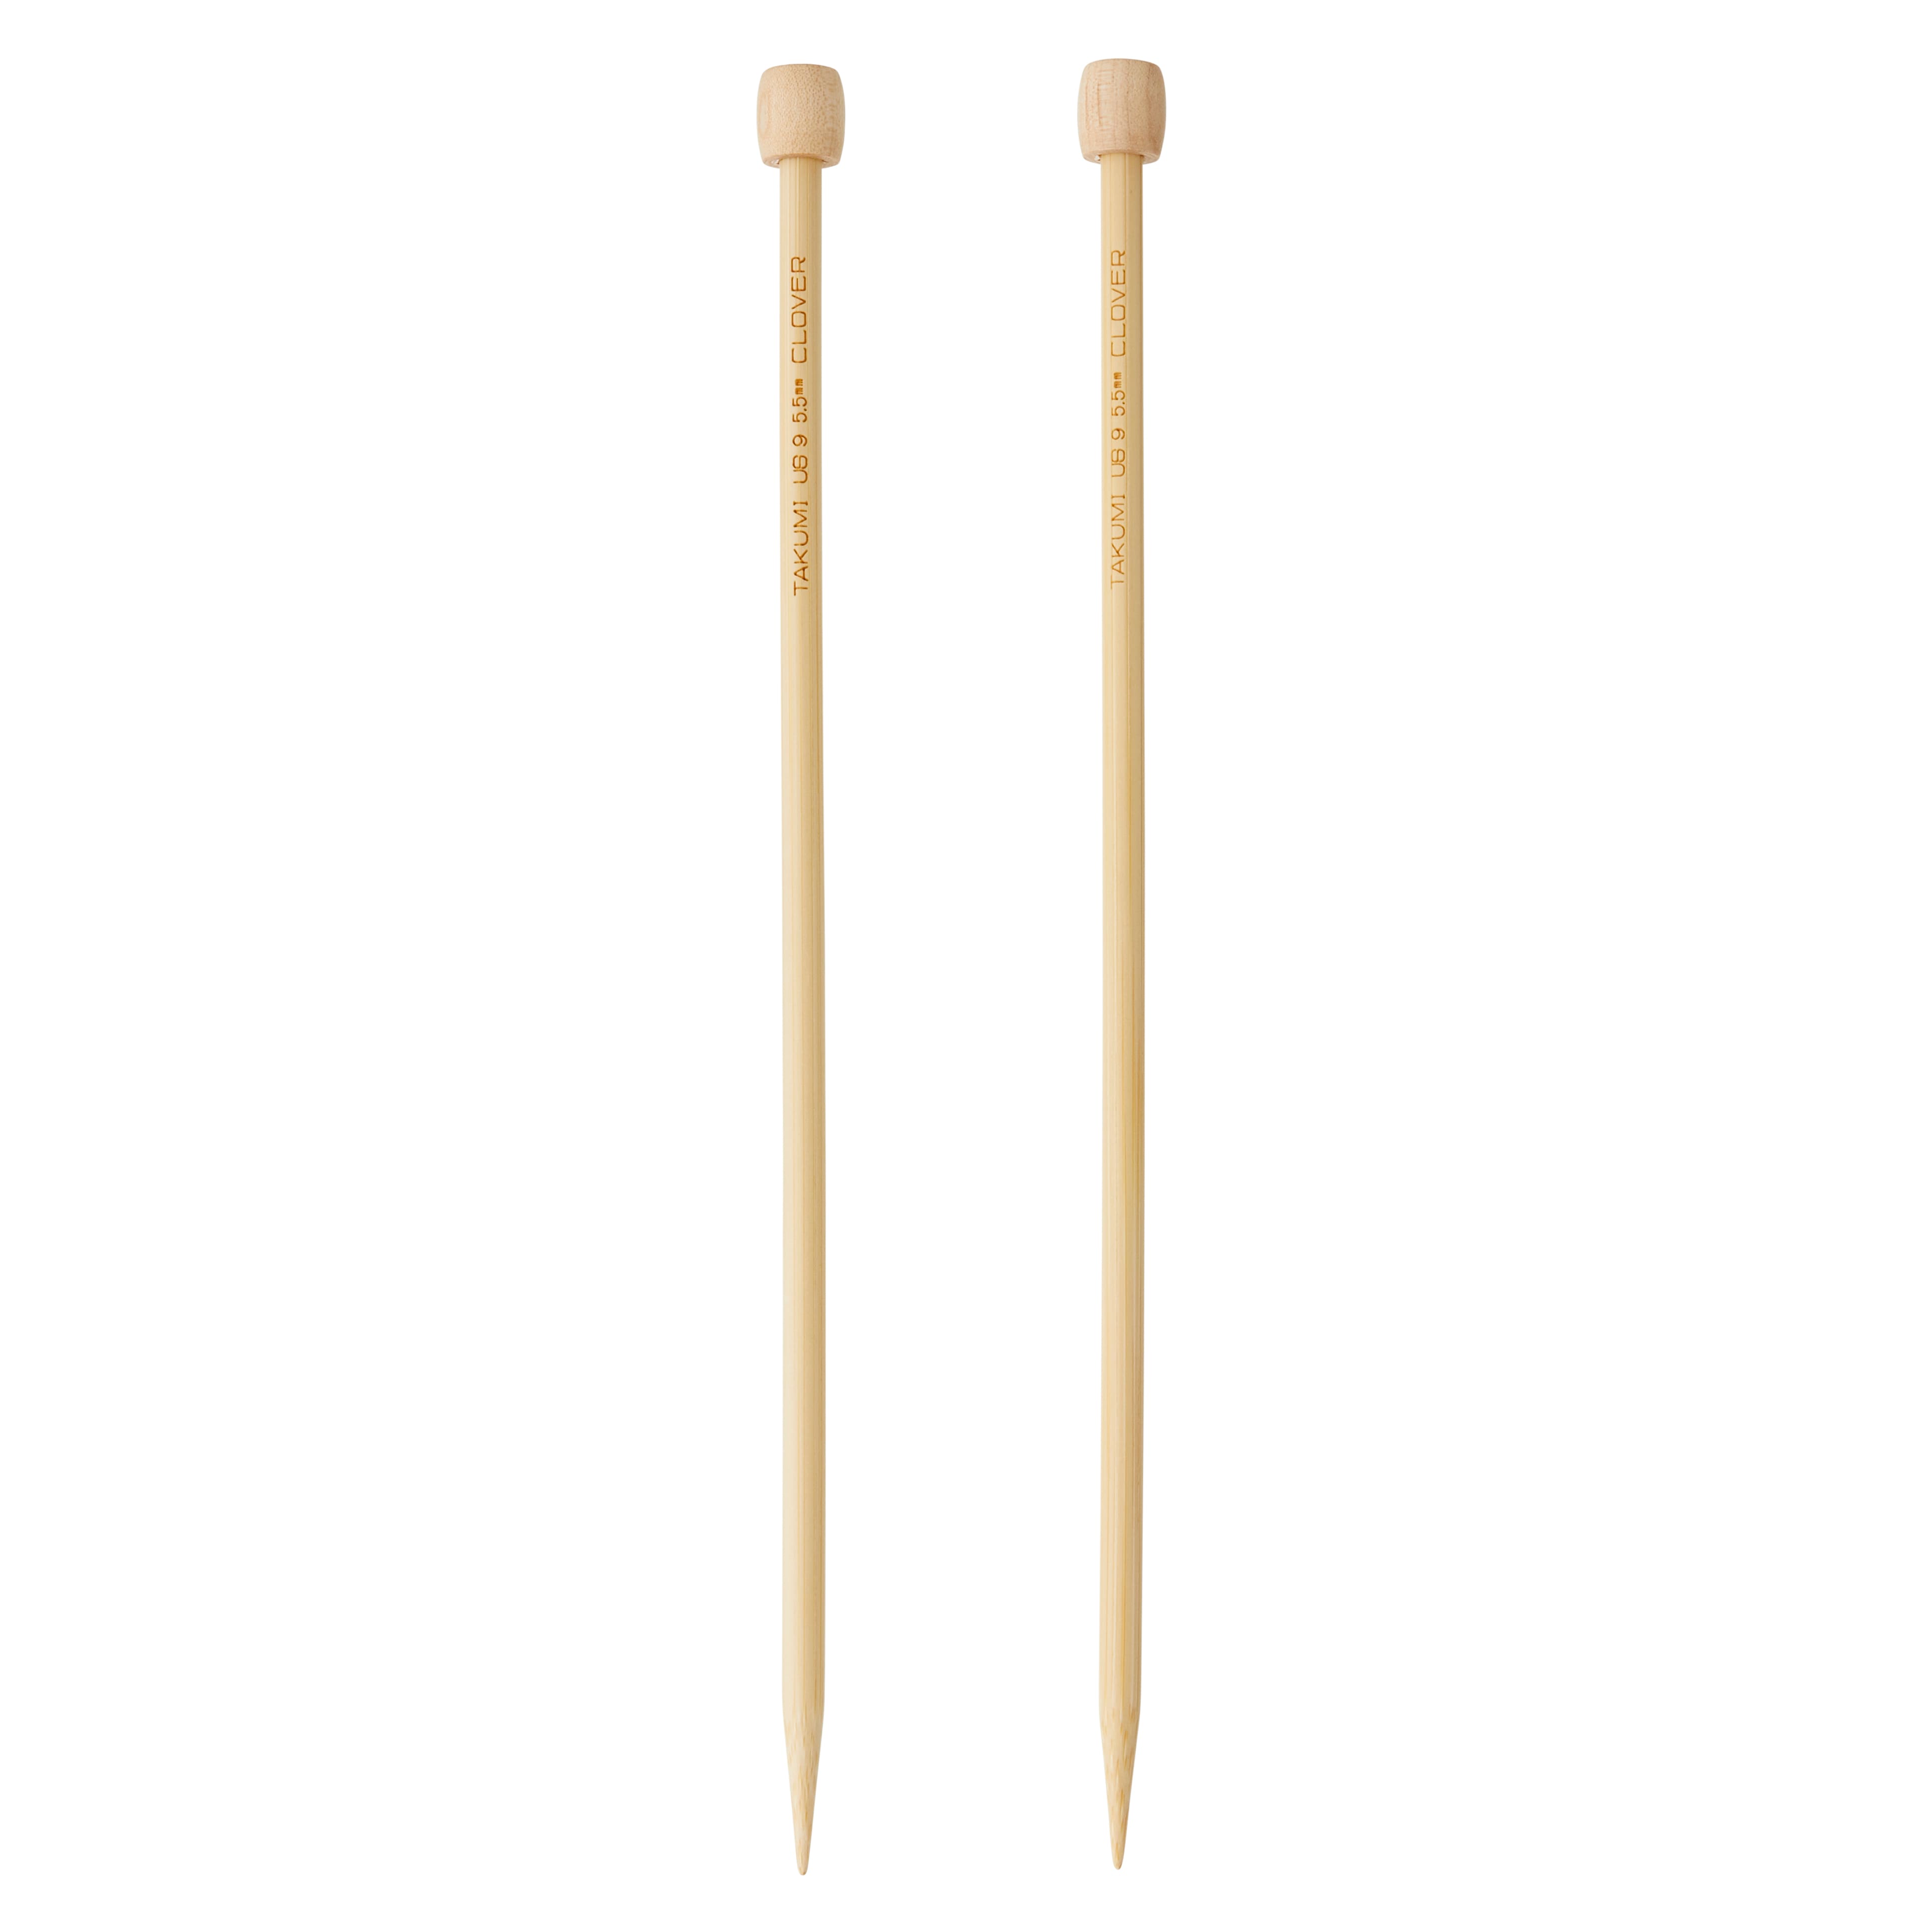 Clover Takumi Single Point Bamboo Knitting Needles - 9 Size 5